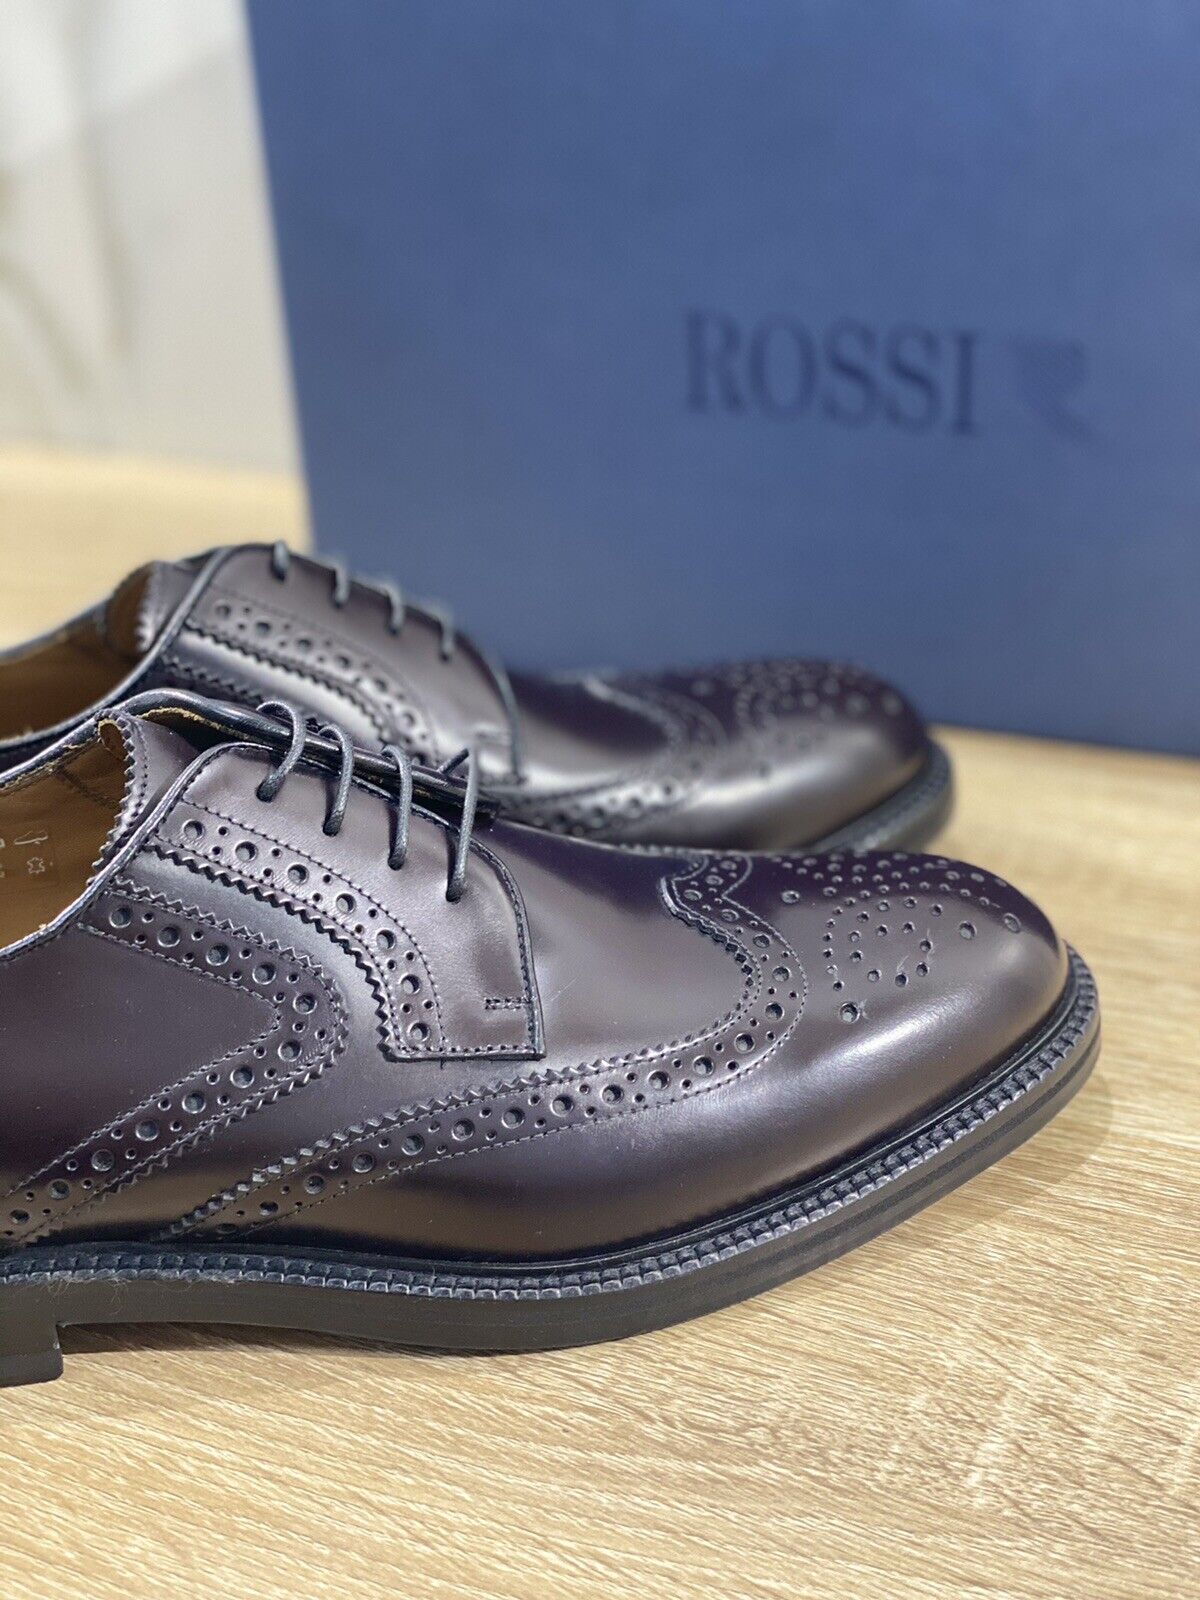 Rossi Stringata Uomo In Pelle Polish Binder Bordo’ Luxury Men Shoe 6413 40